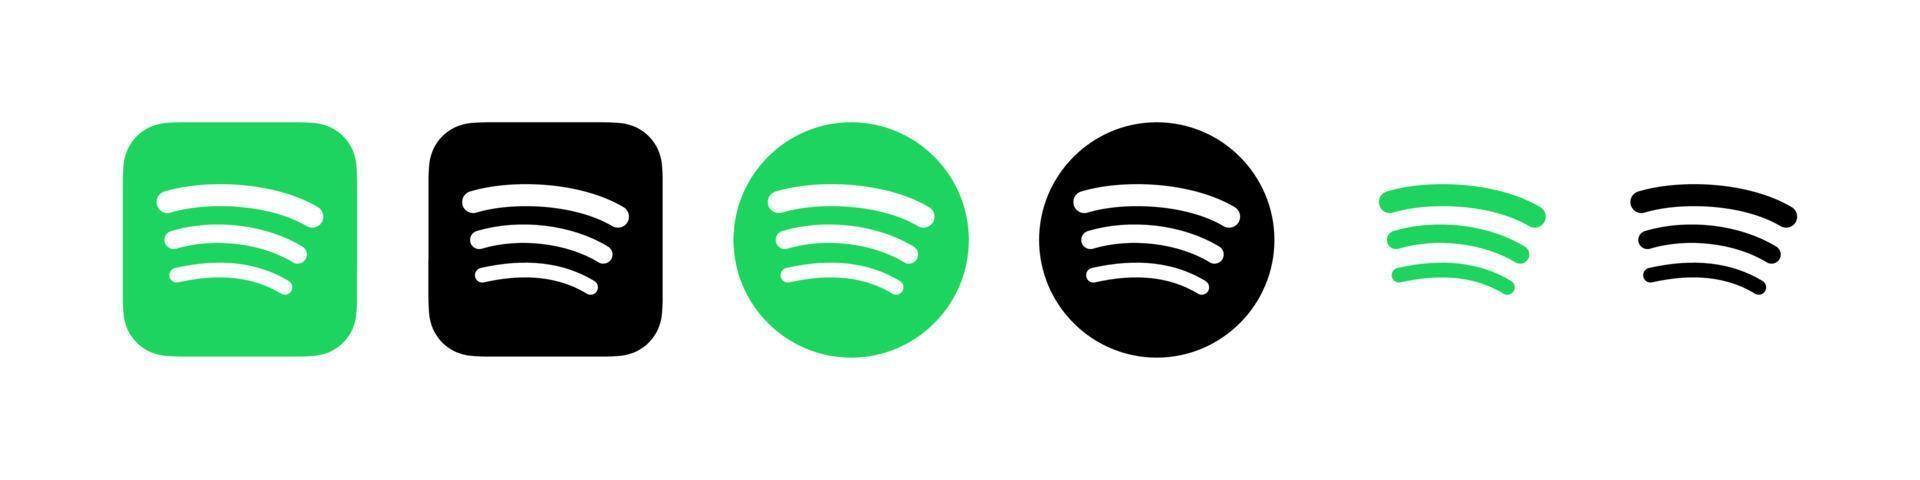 Spotify logo vector, Spotify symbol, Spotify icon free vector